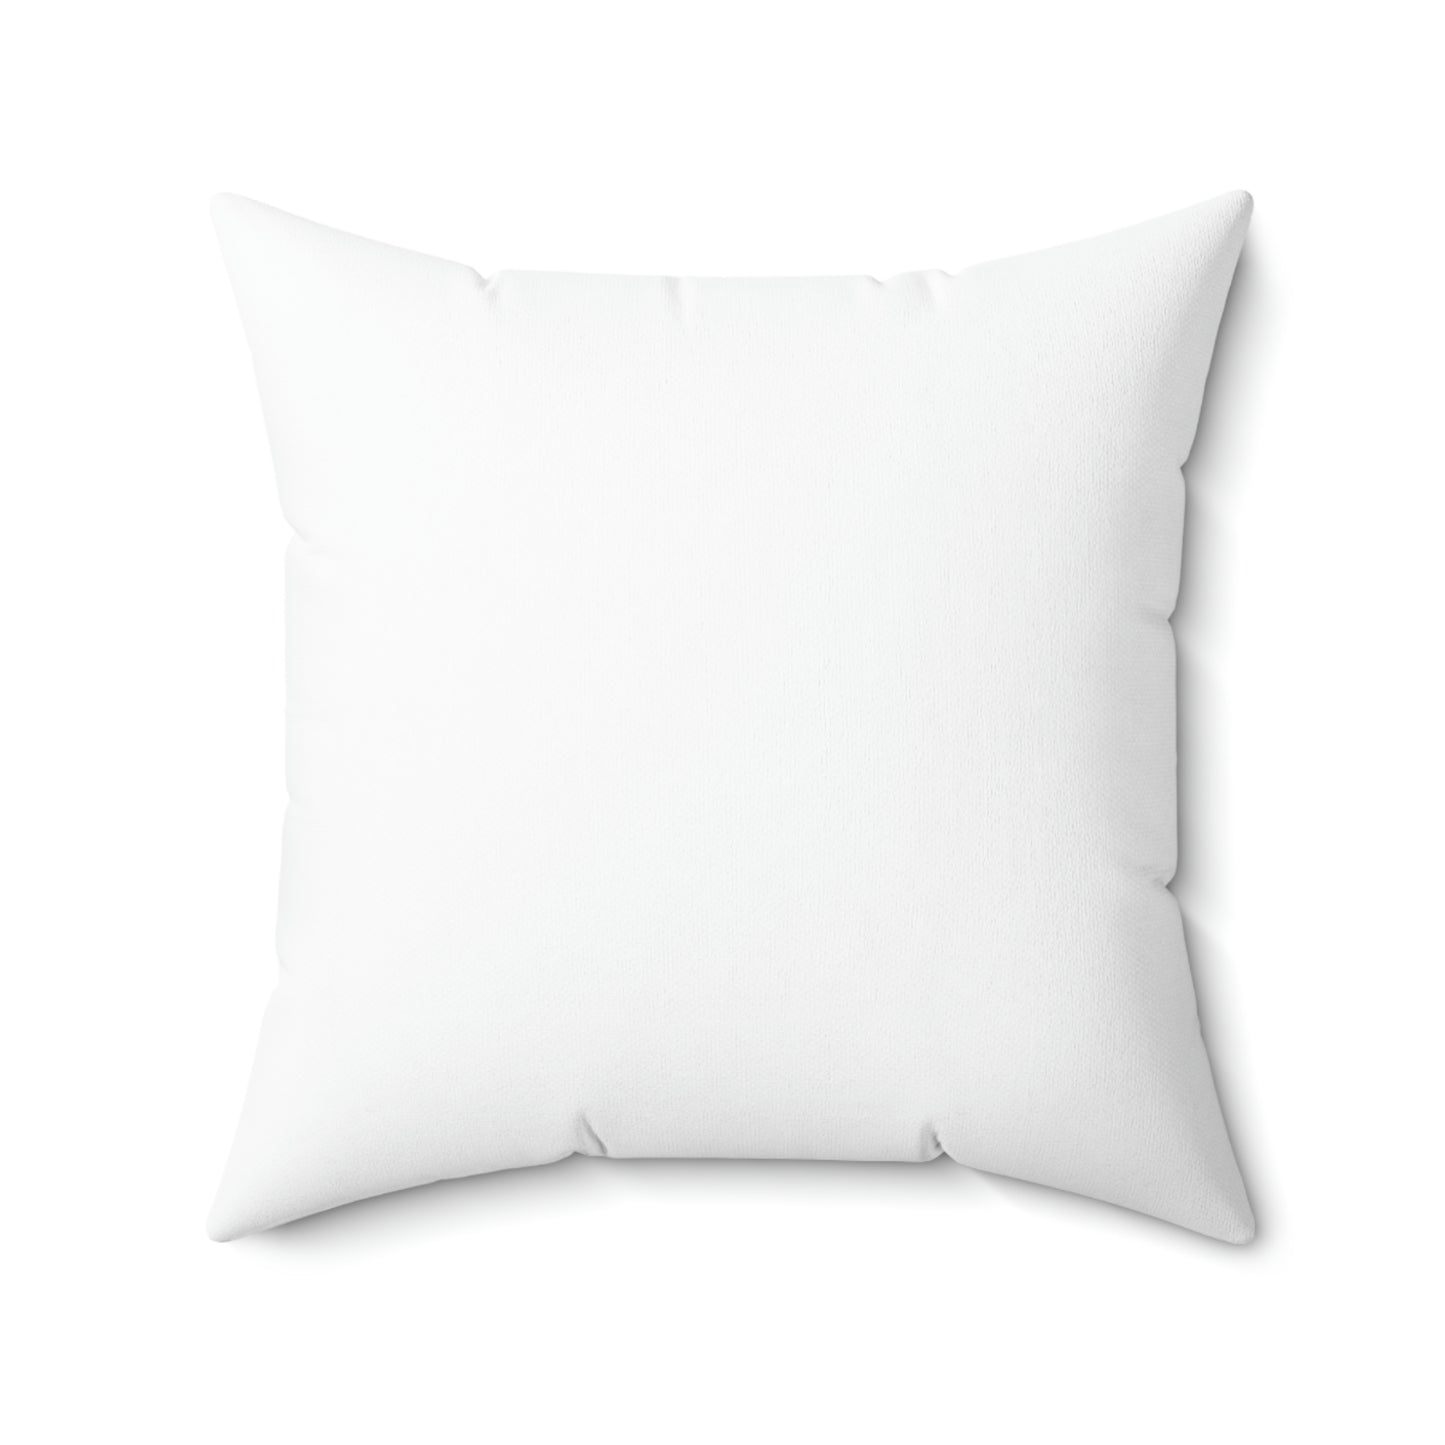 Spun Polyester Square Pillow Case “Moth Black on White”